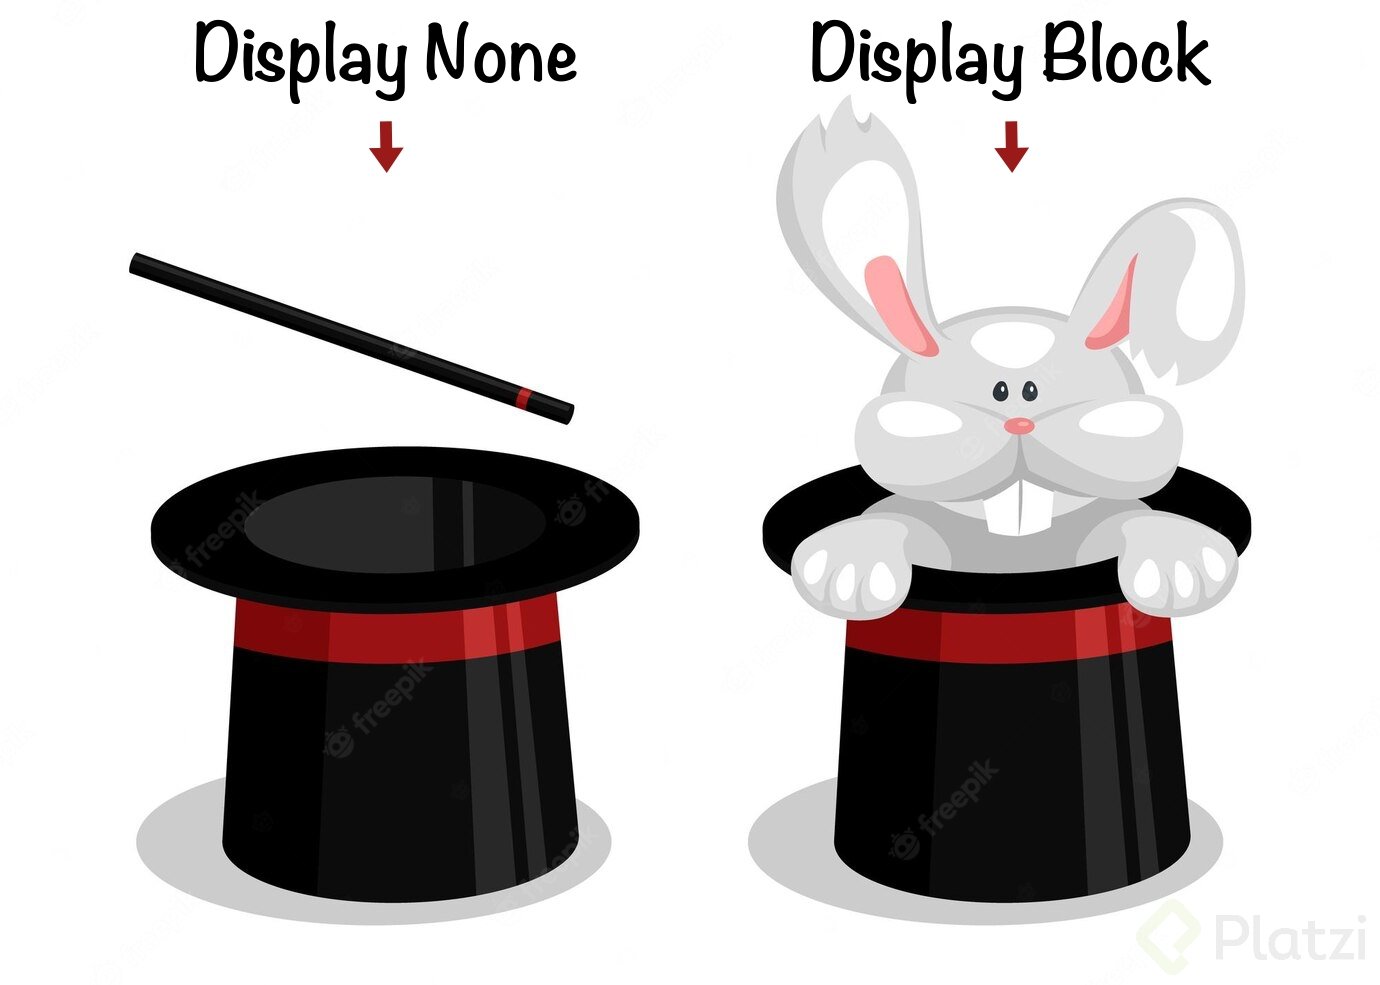 display-none-display-block.jpg